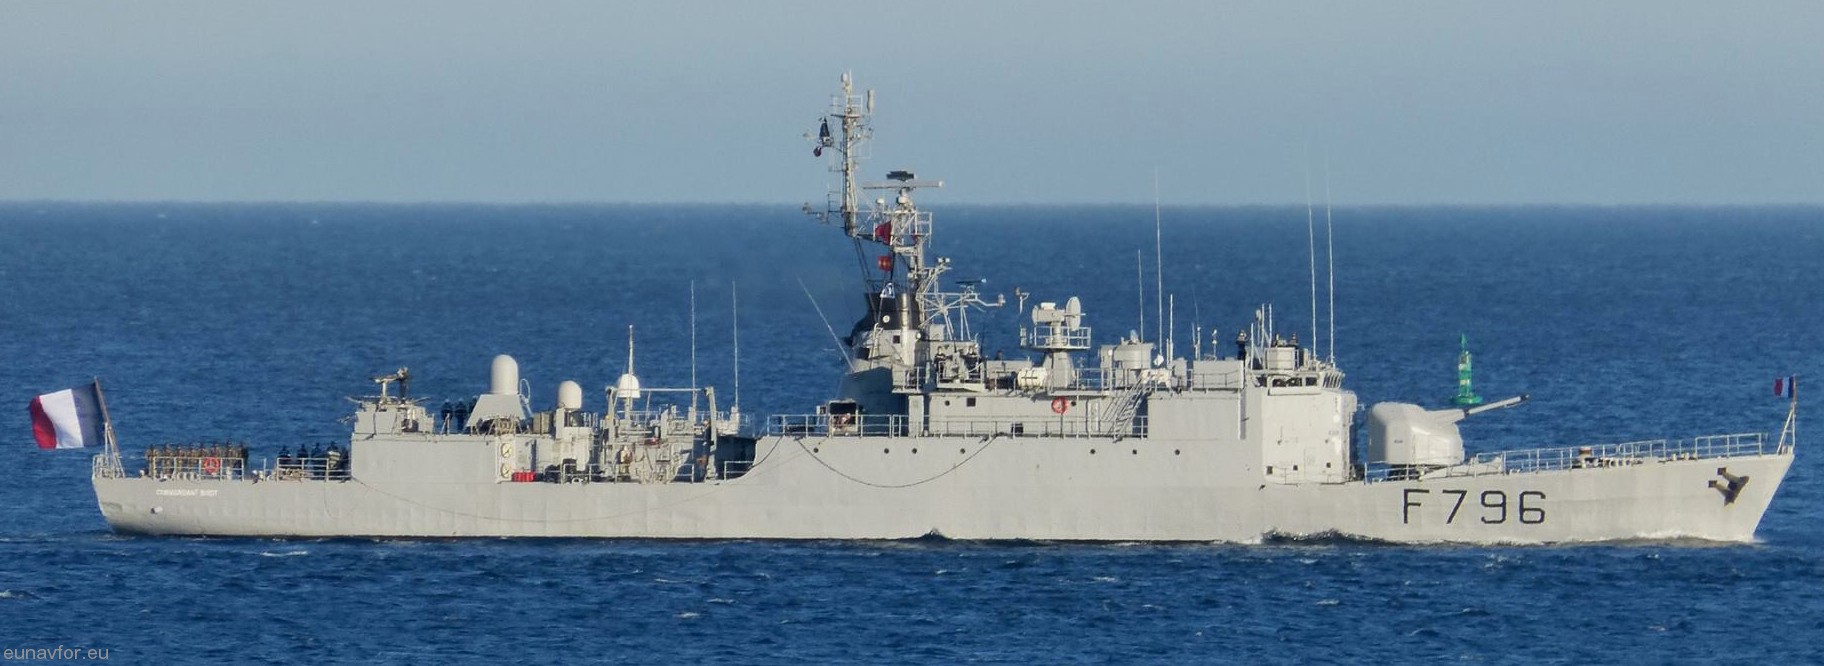 f-796 fs commandant birot d'estienne d'orves class corvette type a69 aviso french navy marine nationale 02